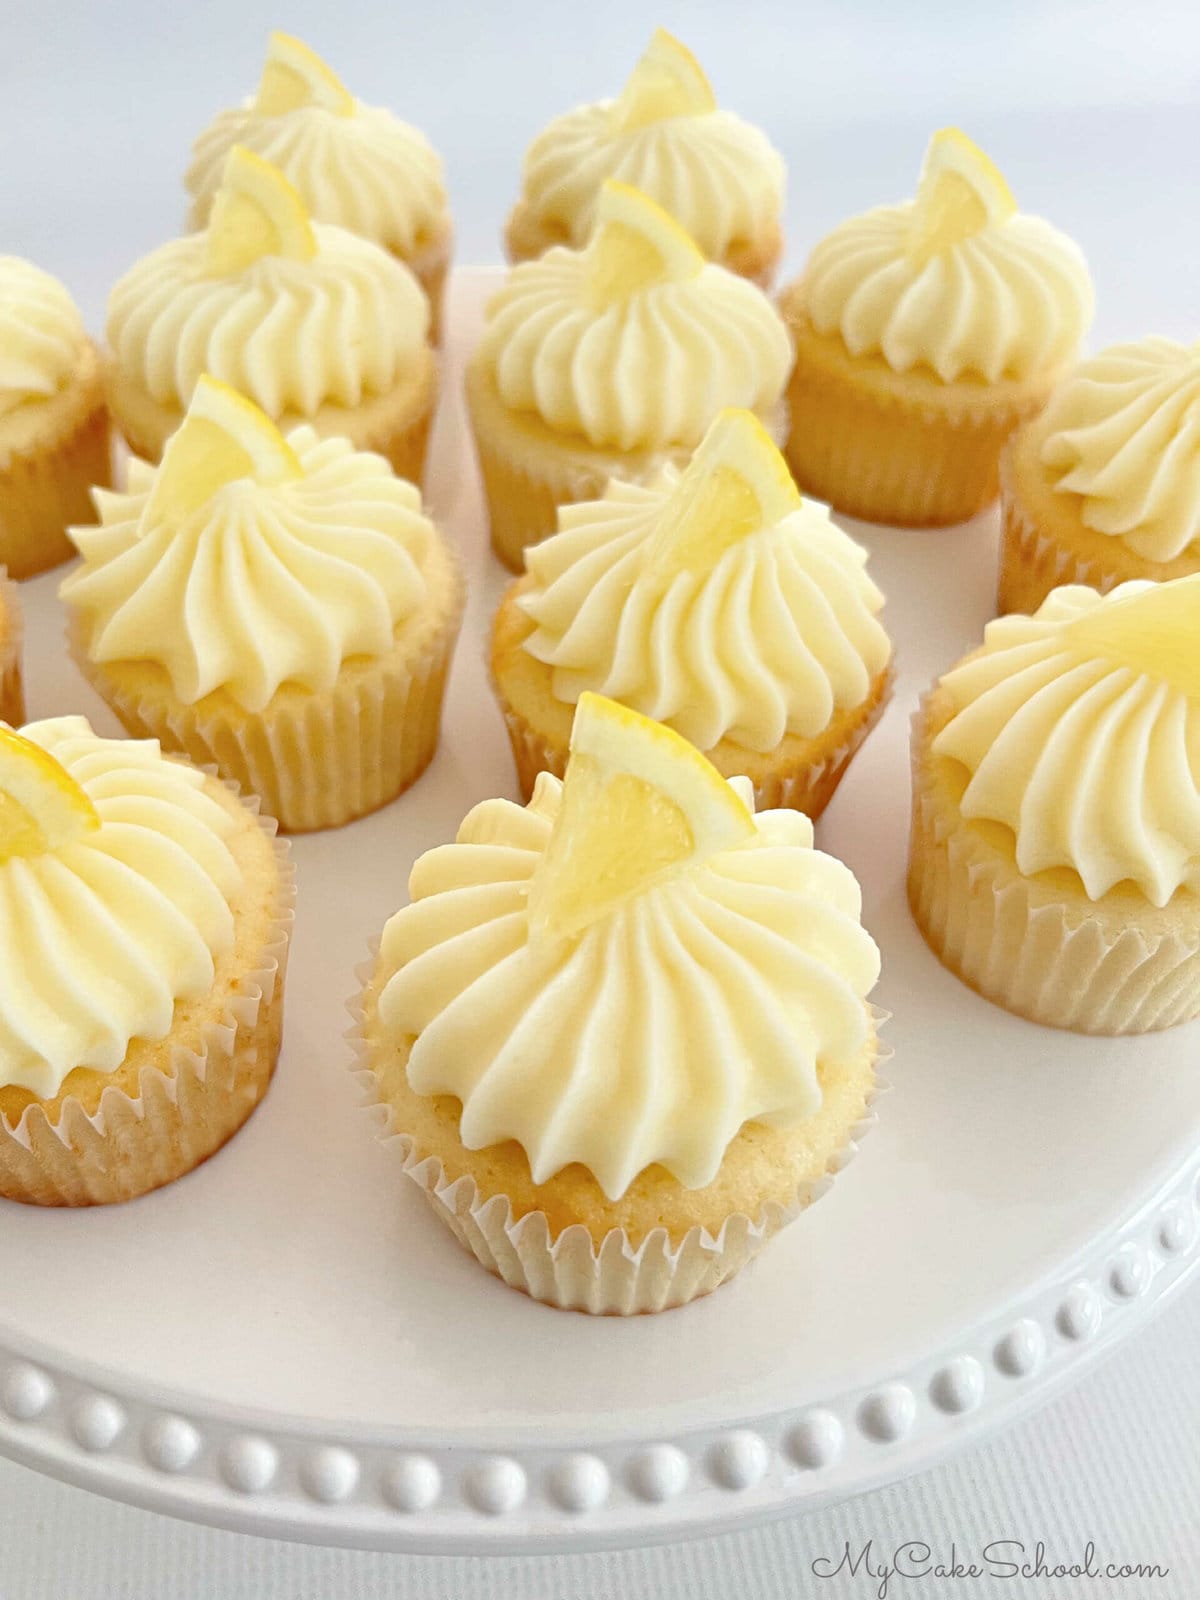 Lemon Cupcakes on white cake pedestal, topped with small slices of fresh lemon